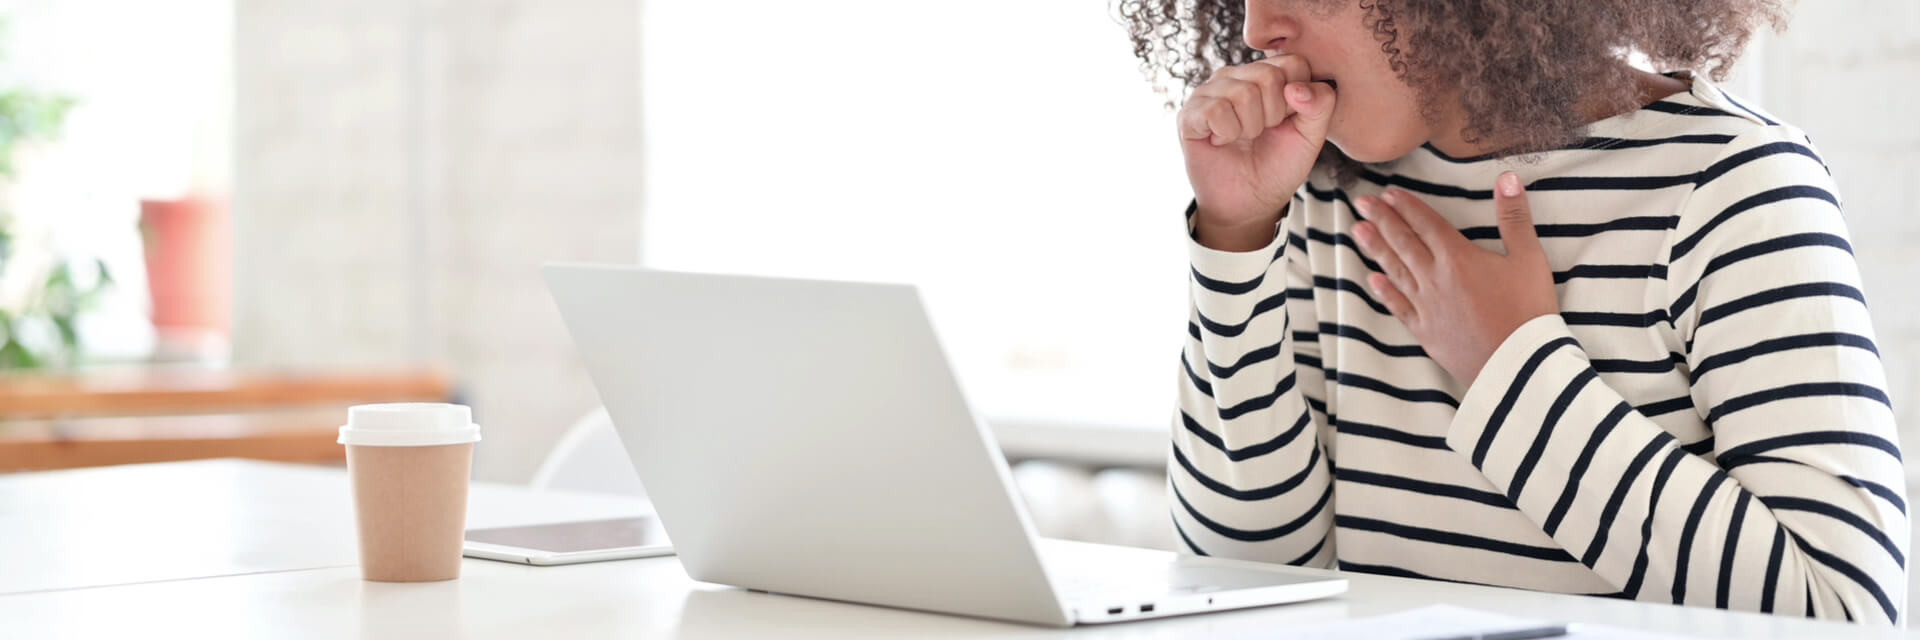 A woman uses an online symptom checker on her laptop.